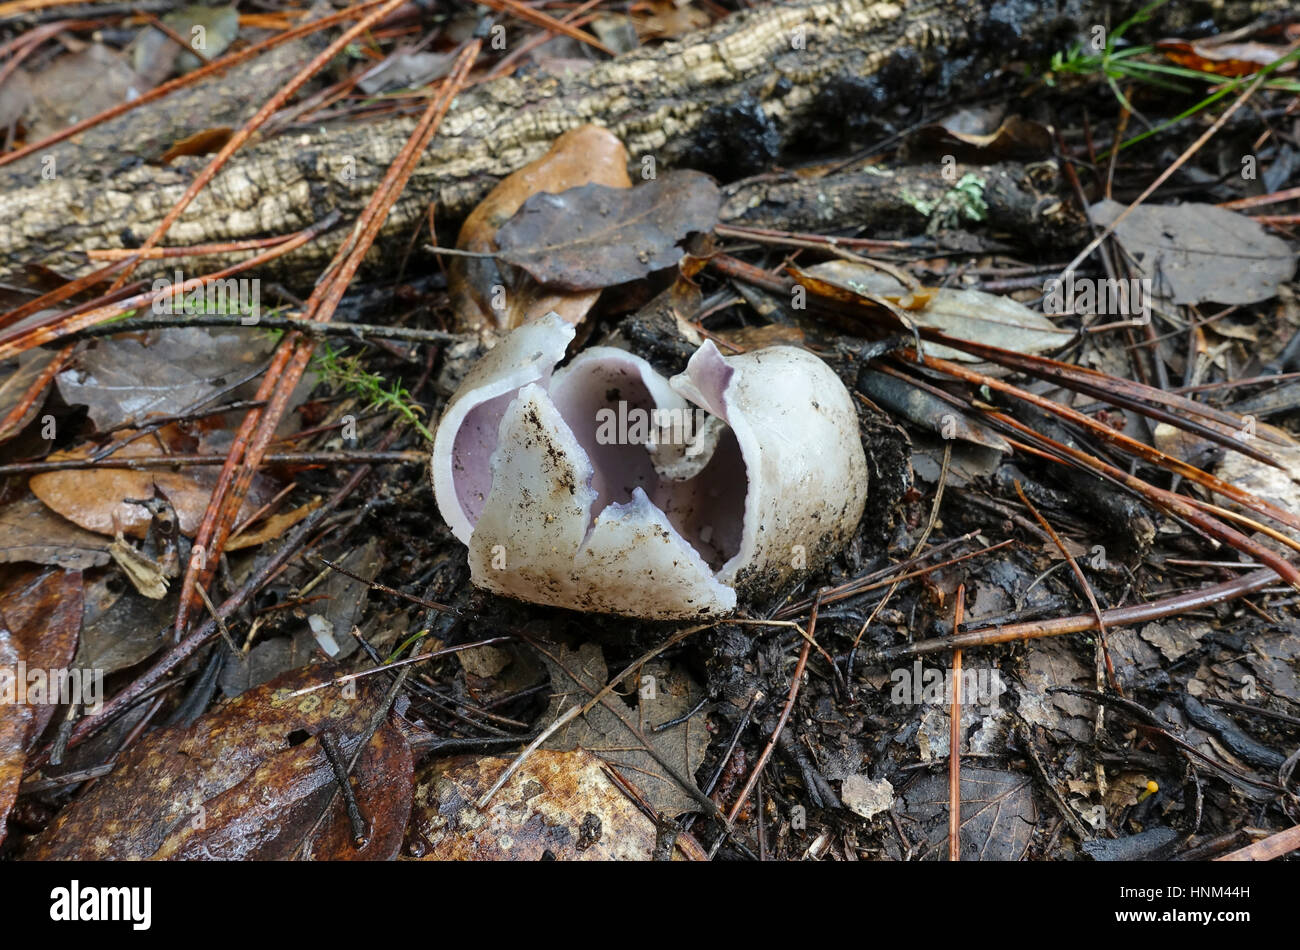 Cup fungi, sarcosphaera coronary, Sarcosphaera coronary, mushroom, in forest in spain, Stock Photo